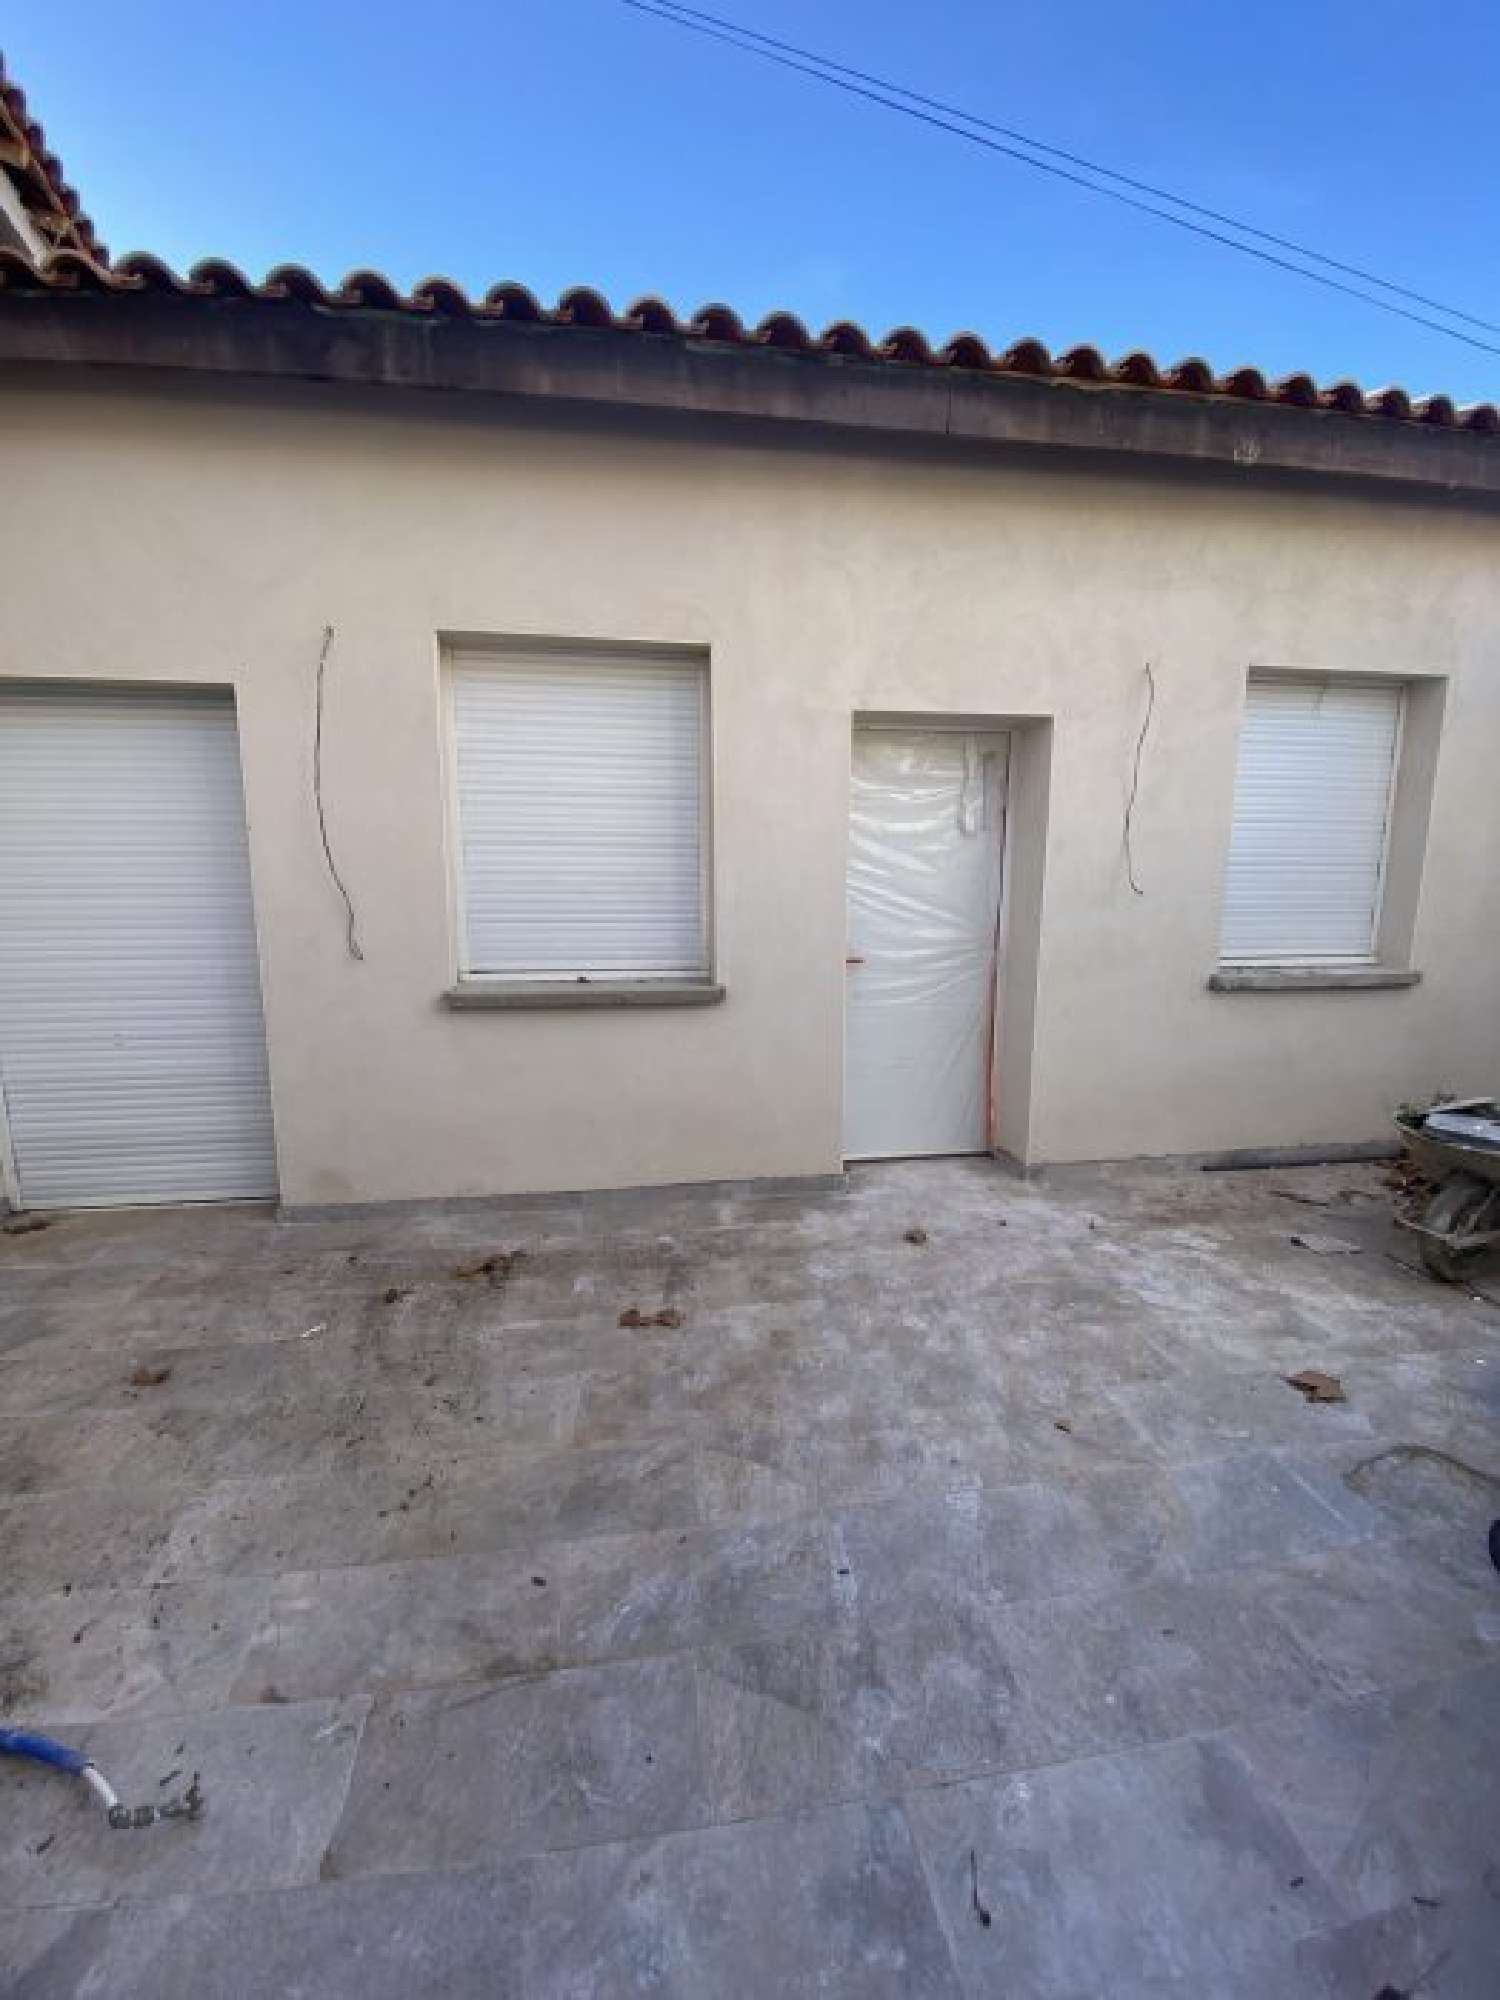  for sale house Béziers Hérault 4